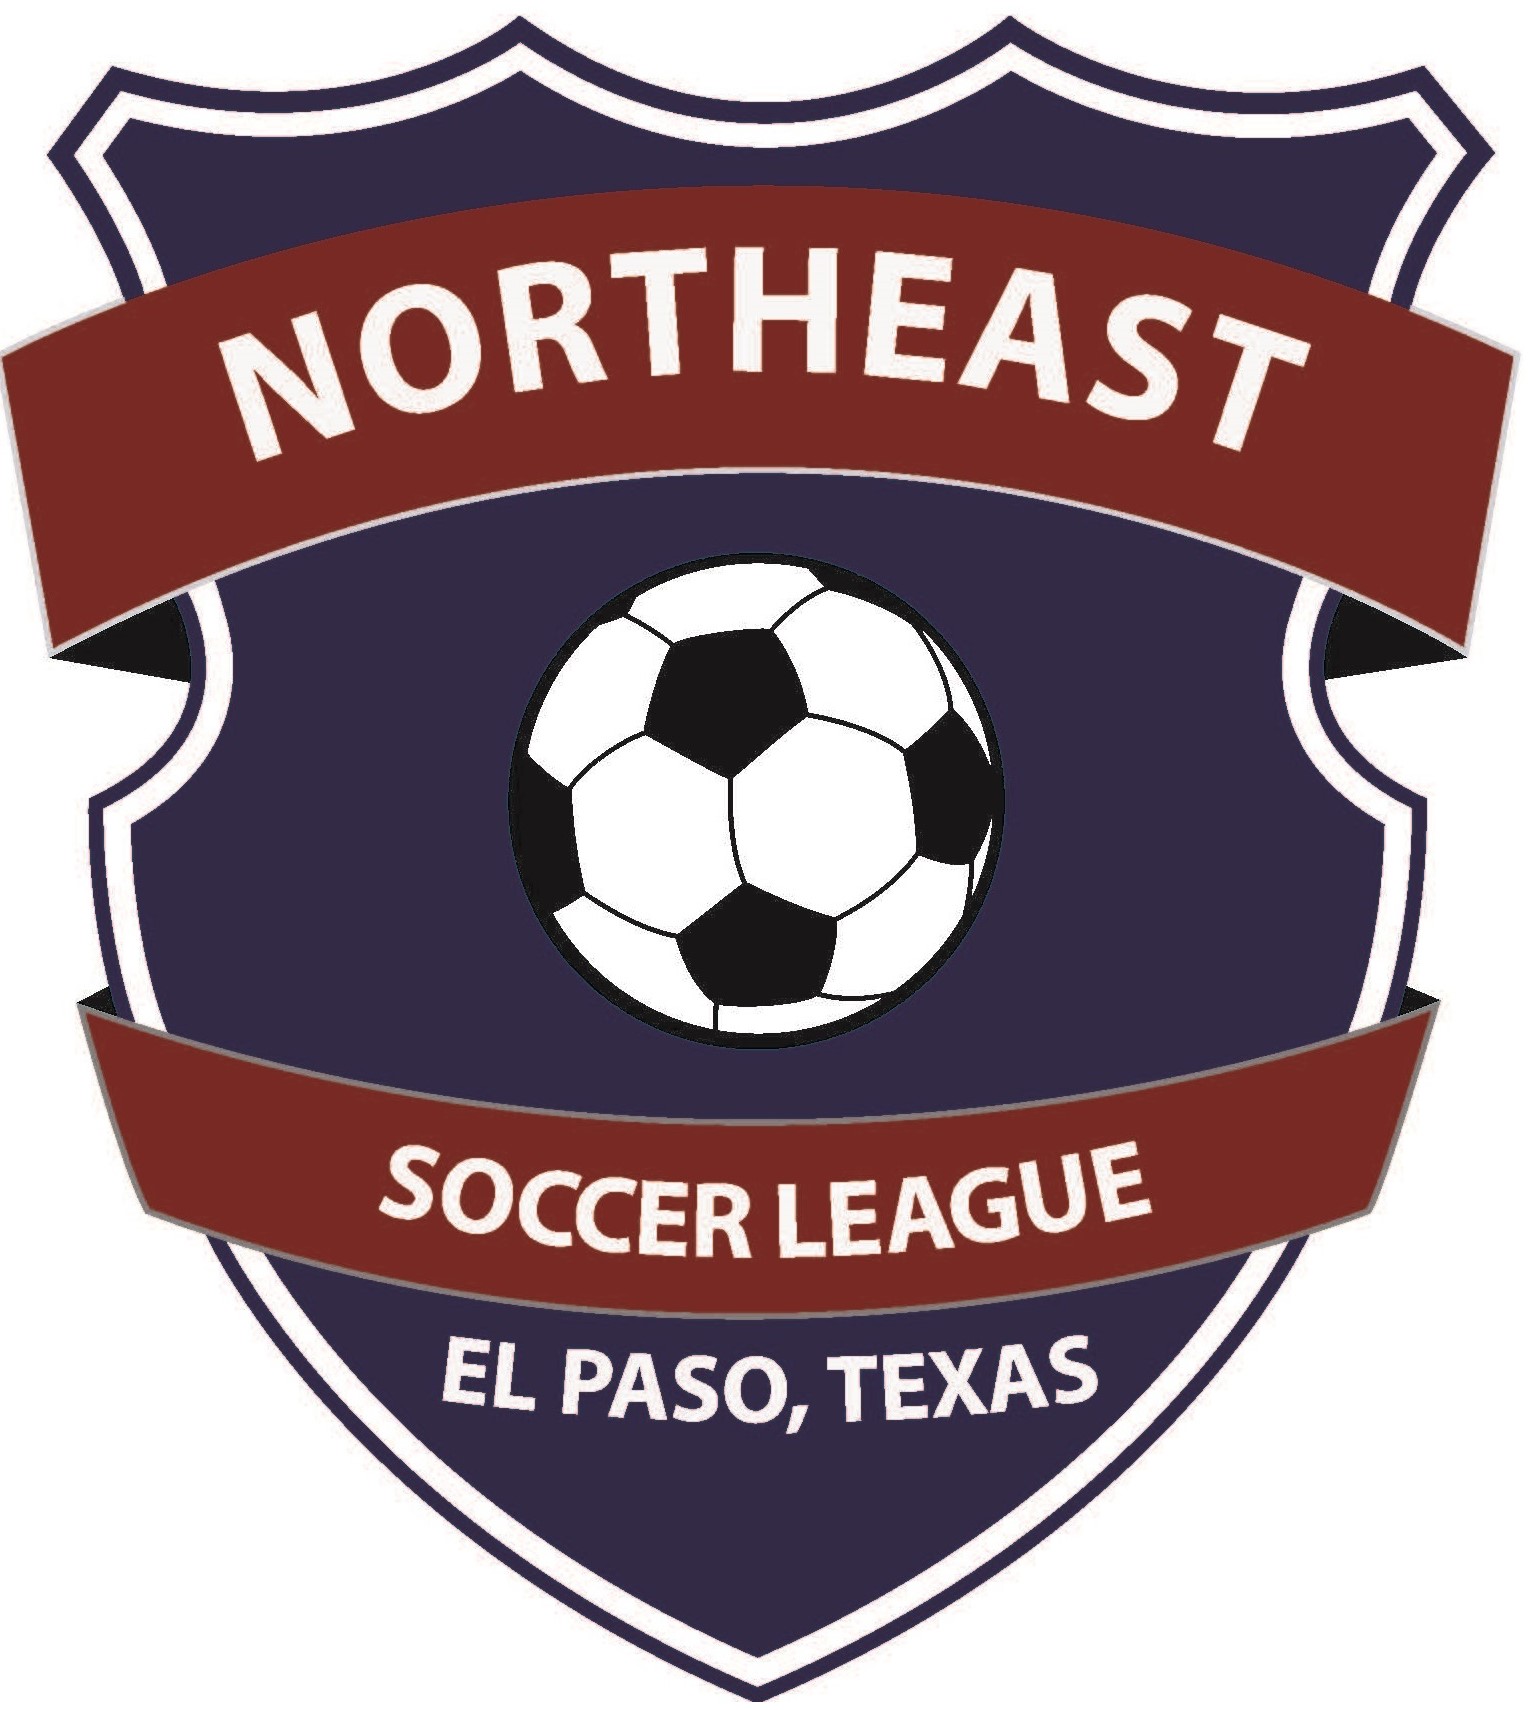 Northeast Soccer League team badge